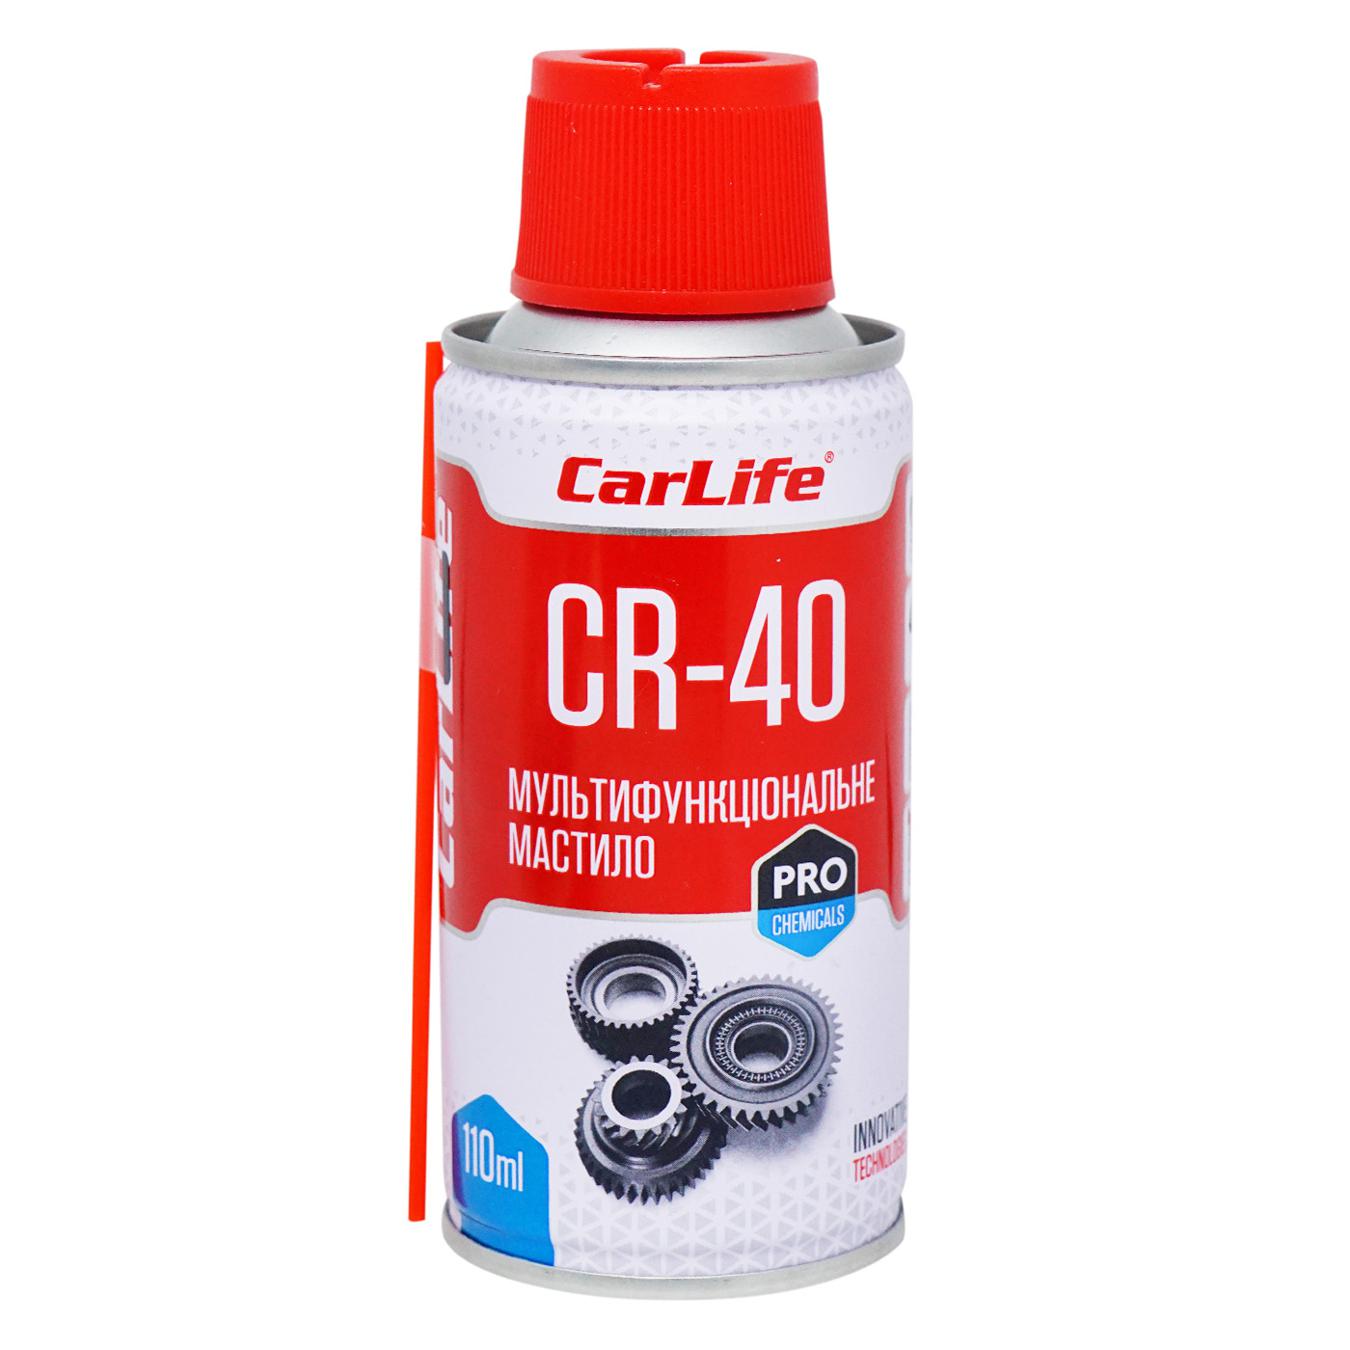 Carlife CR-40 multifunctional lubricant 110 ml